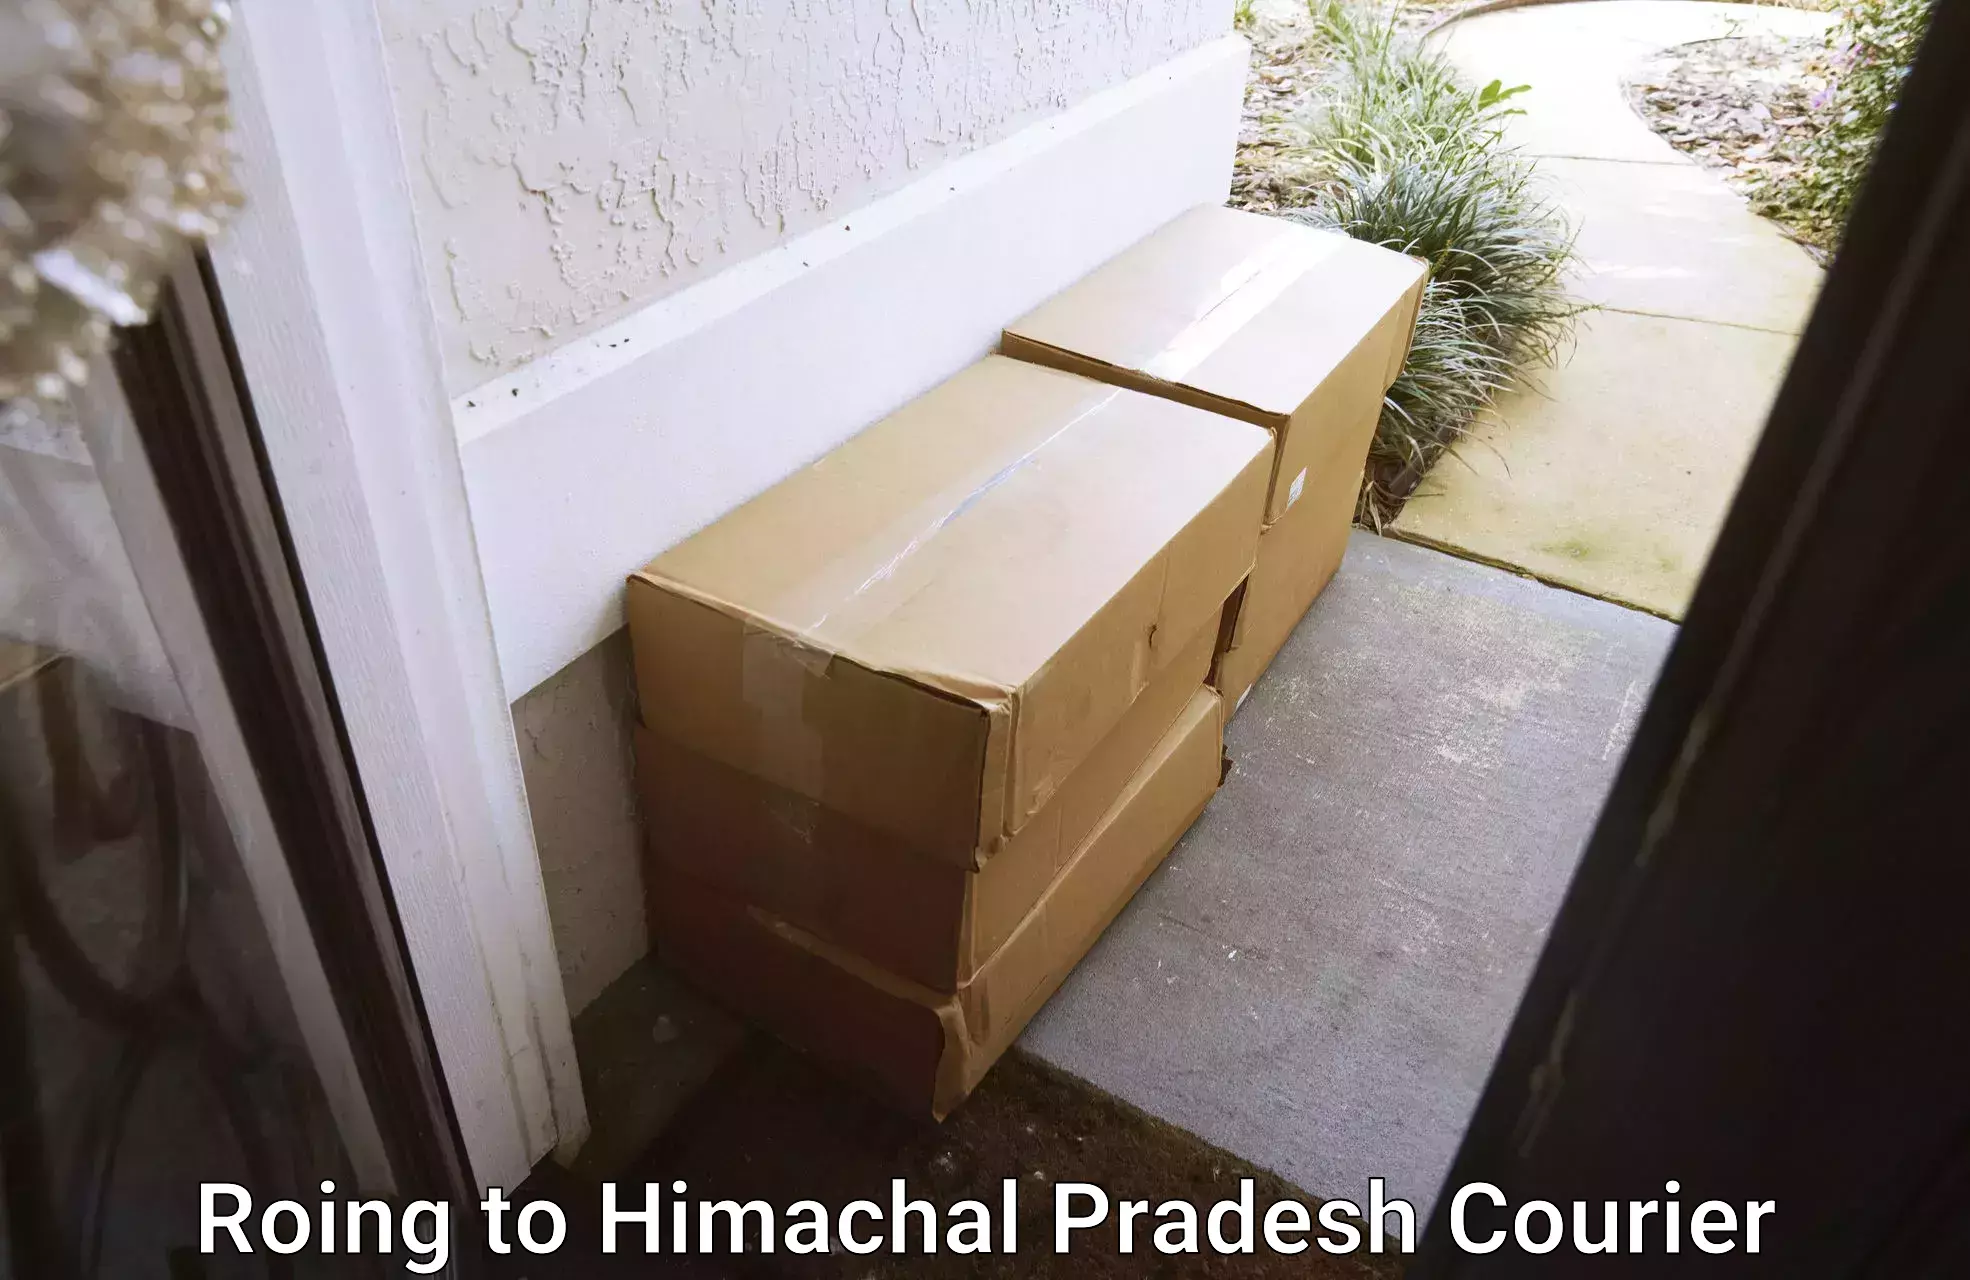 Digital courier platforms Roing to Himachal Pradesh